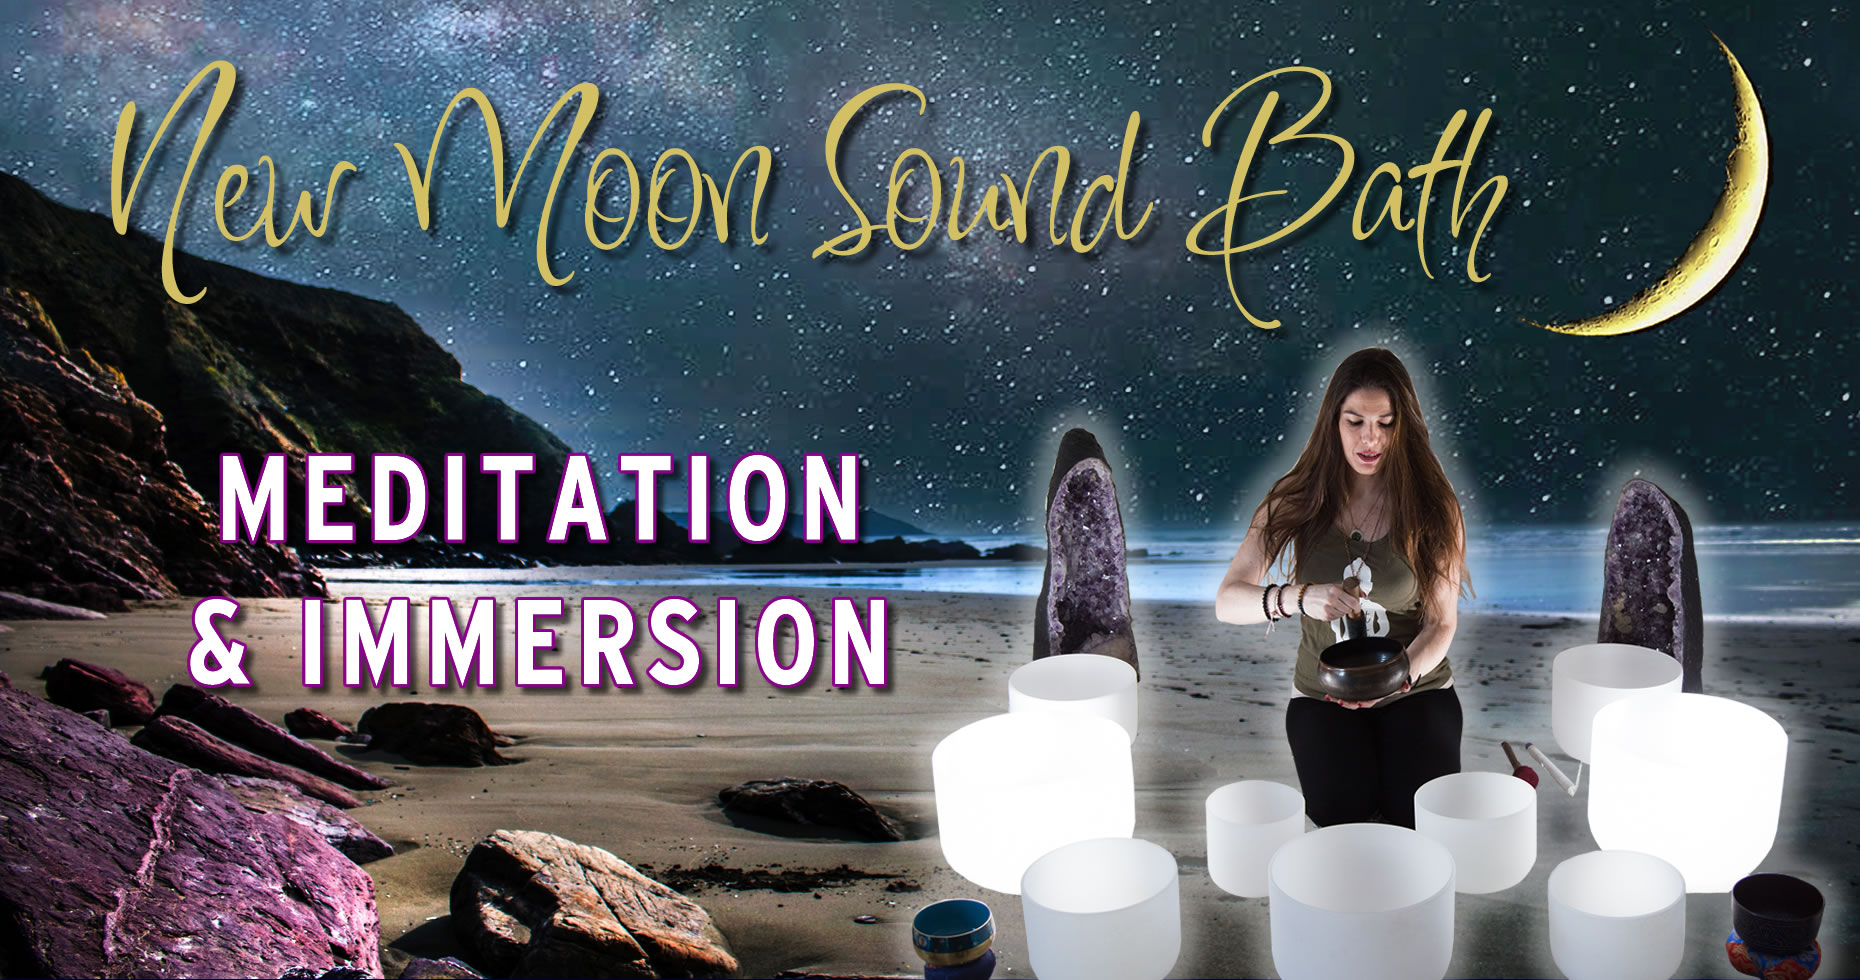 New Moon Sound Bath and Meditation Banner